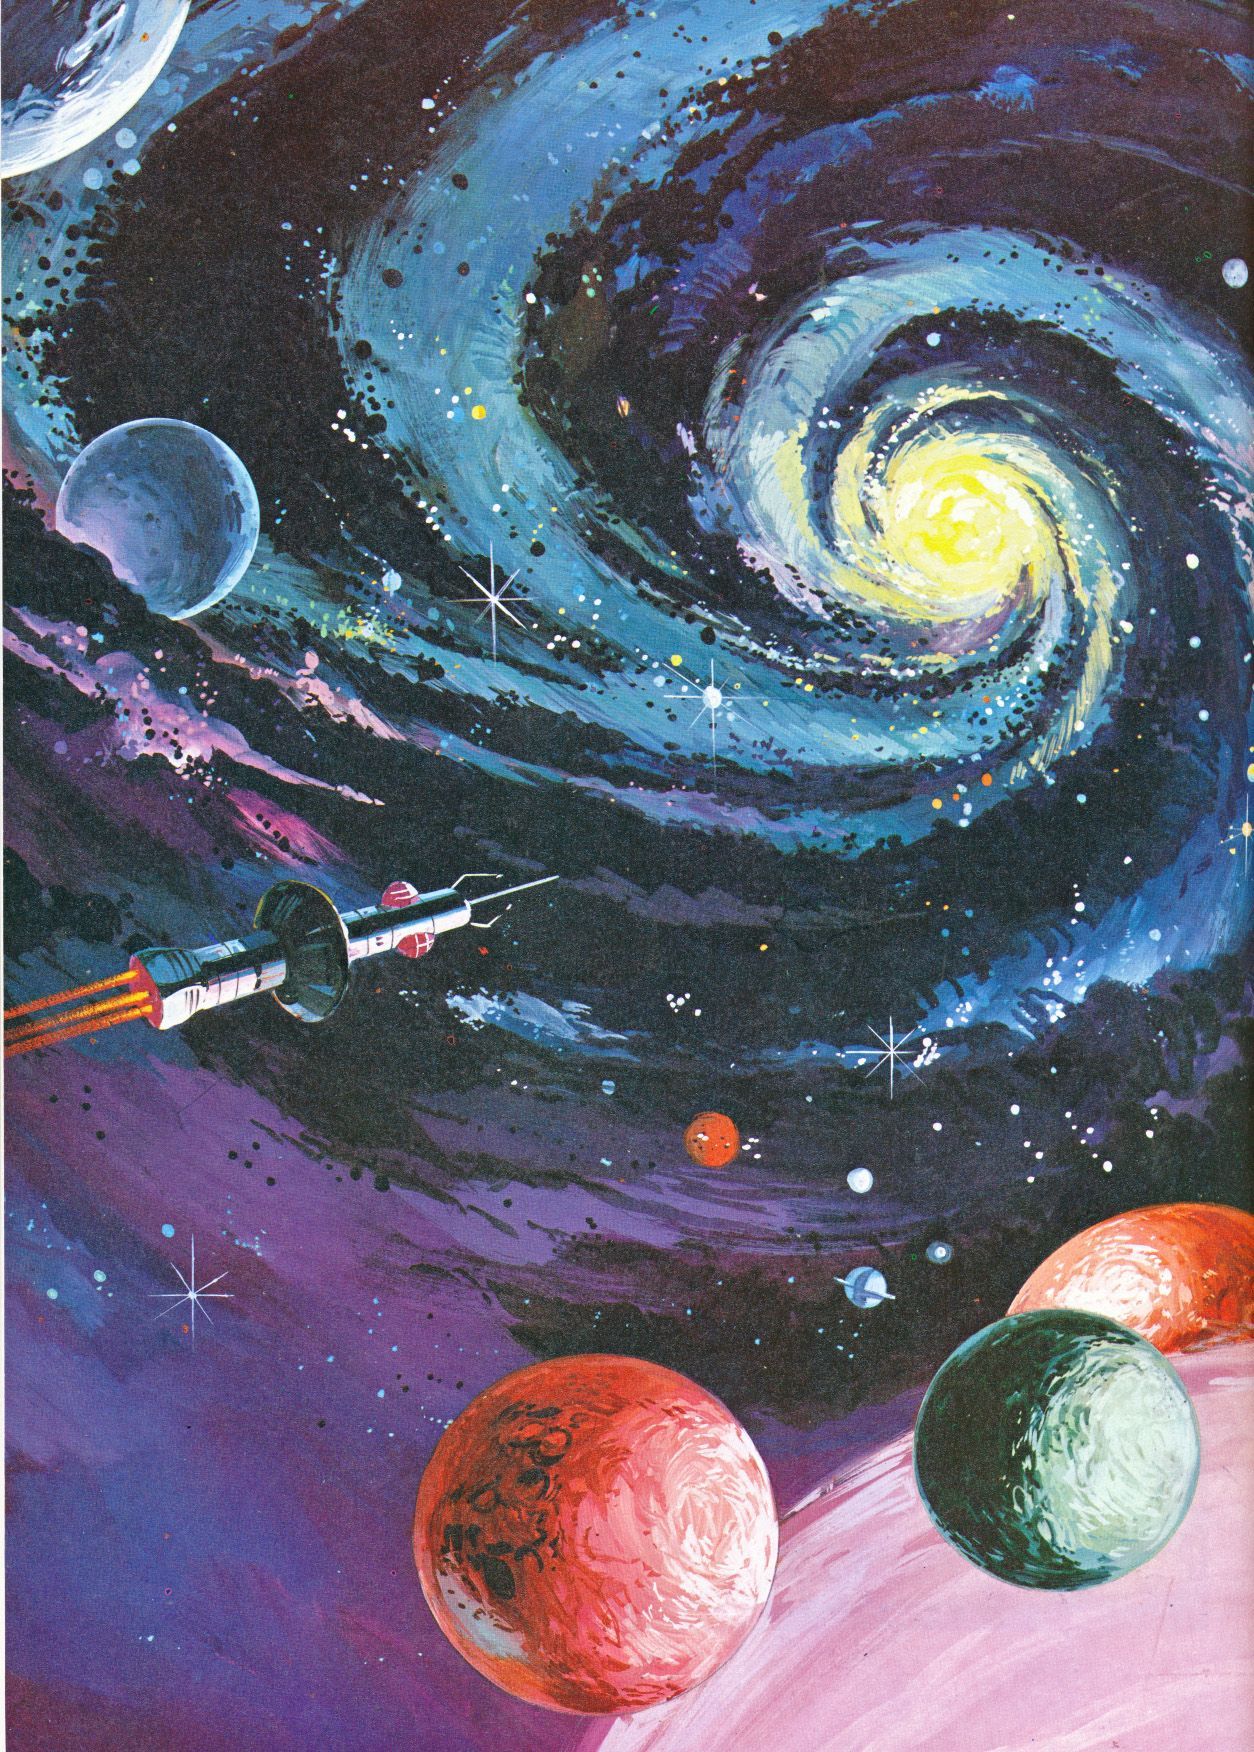 Retro Astronaut Wallpapers